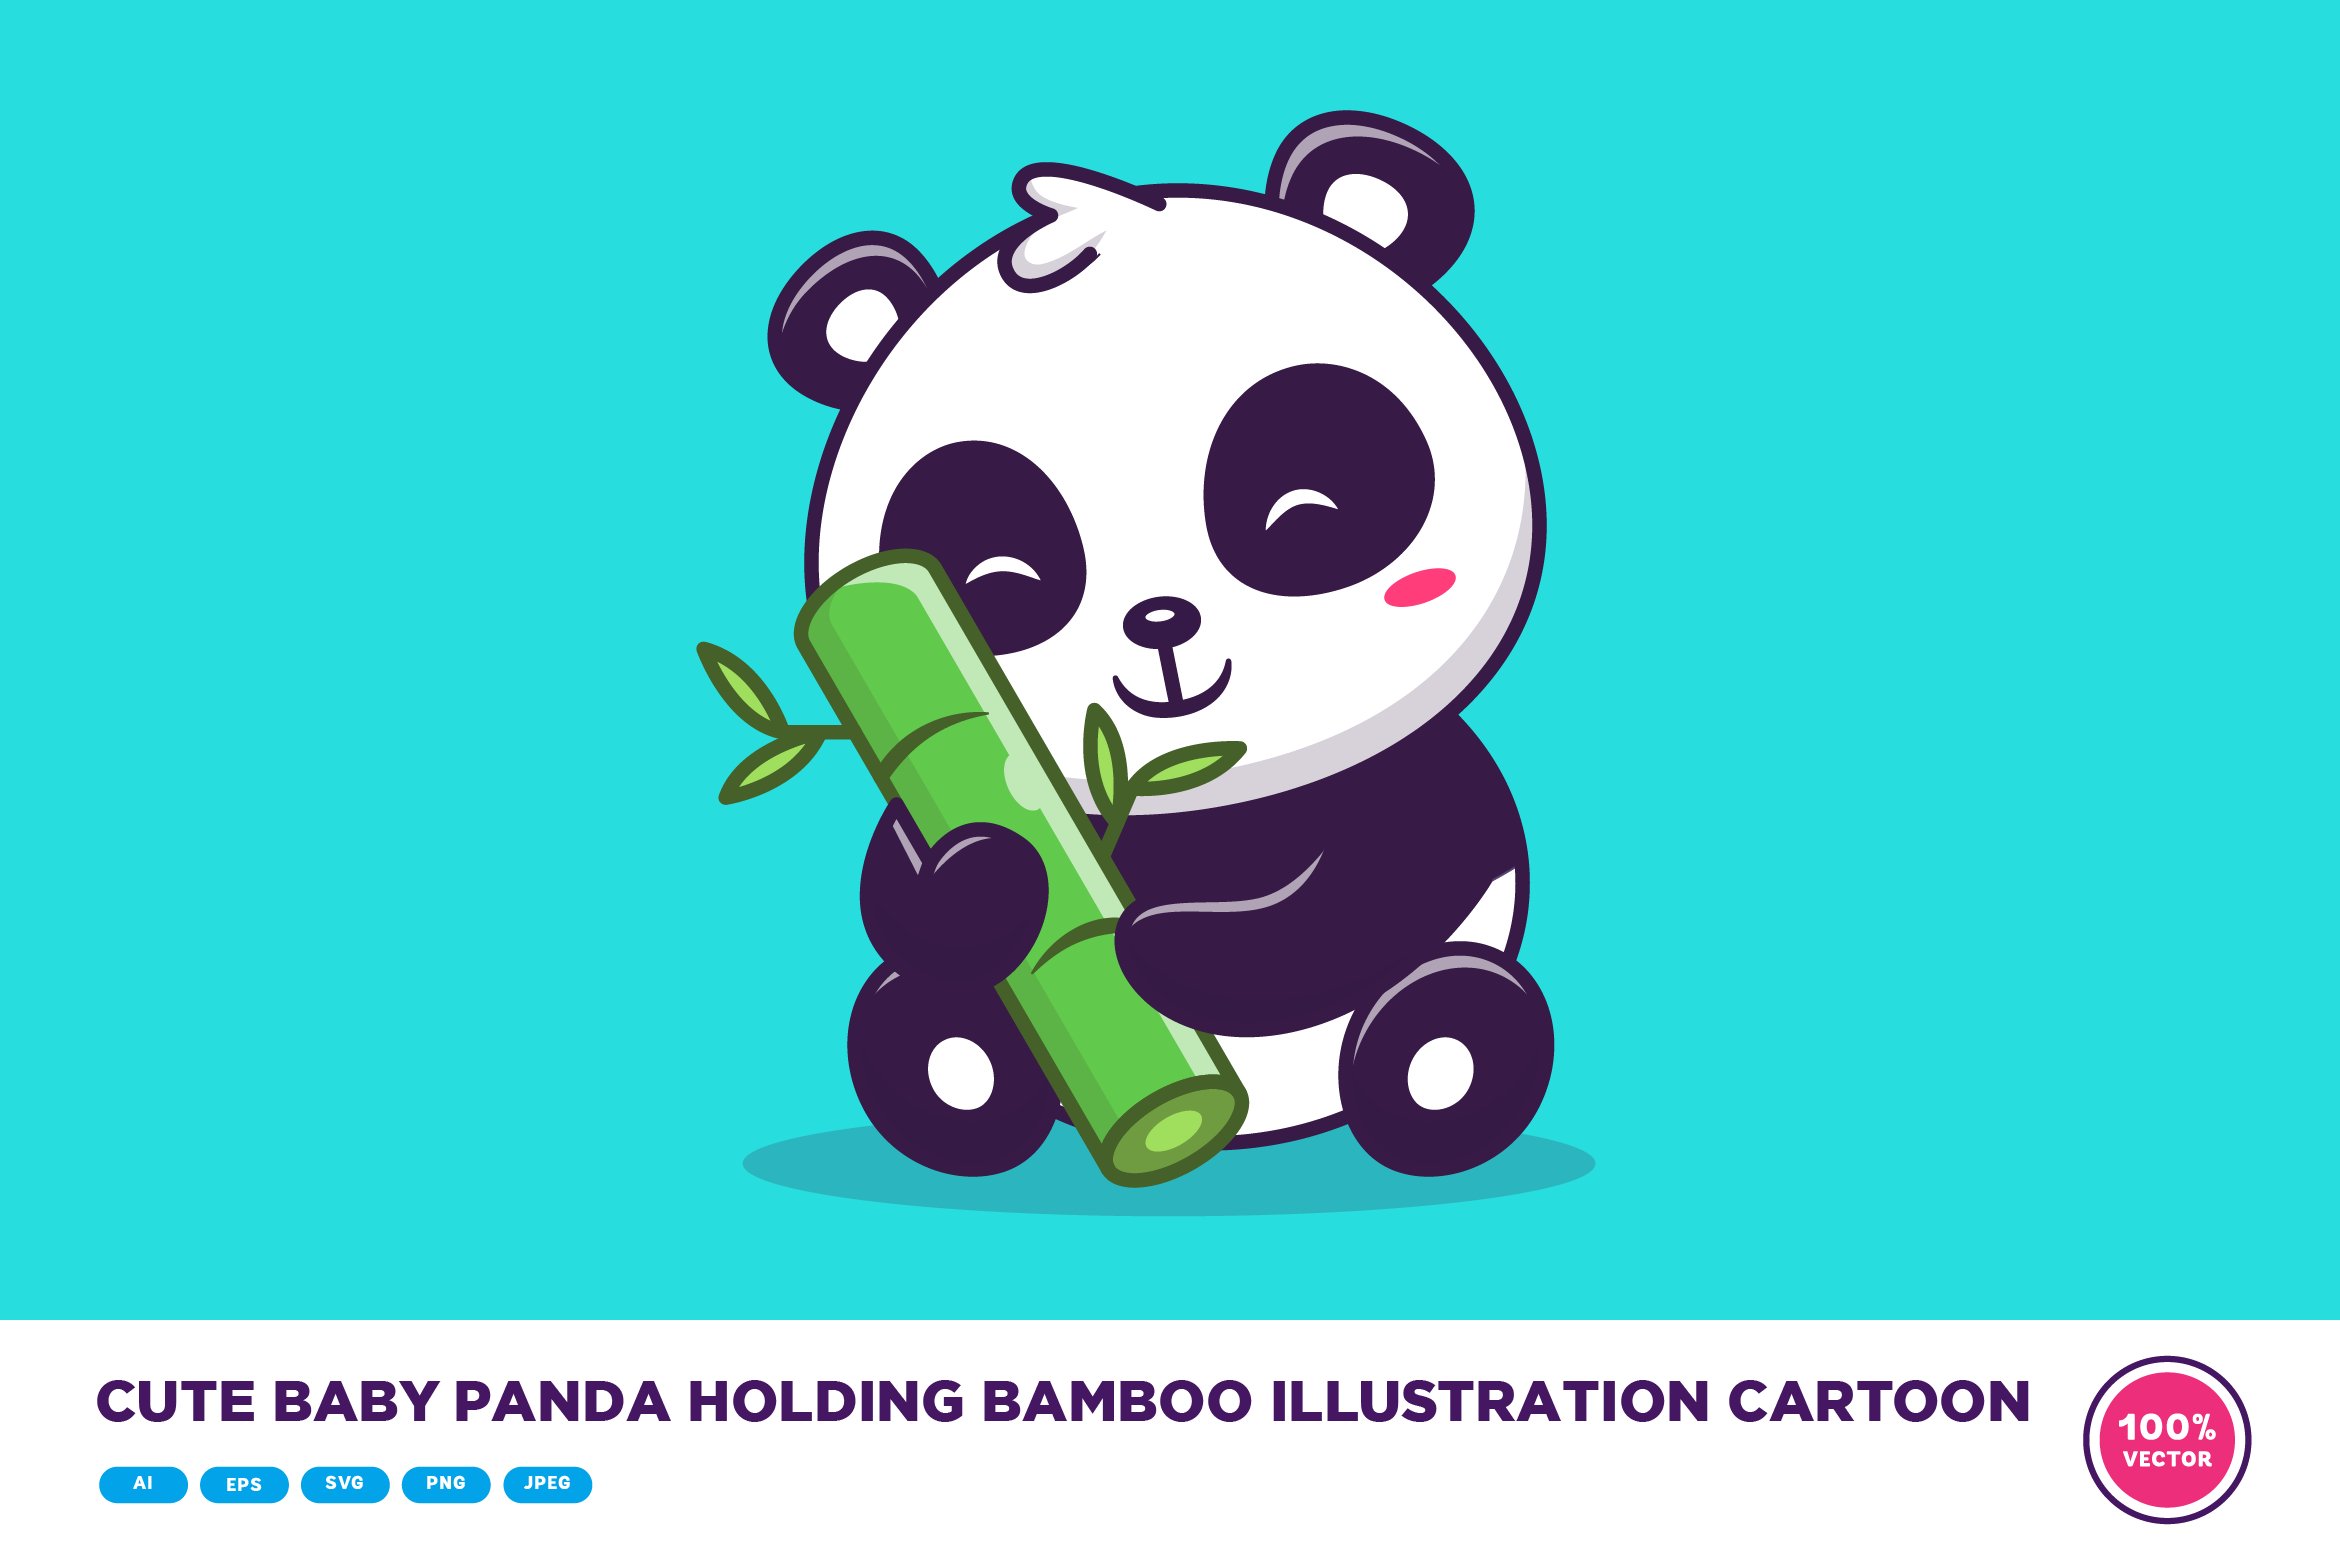 Cute Baby Panda Holding Bamboo cover image.